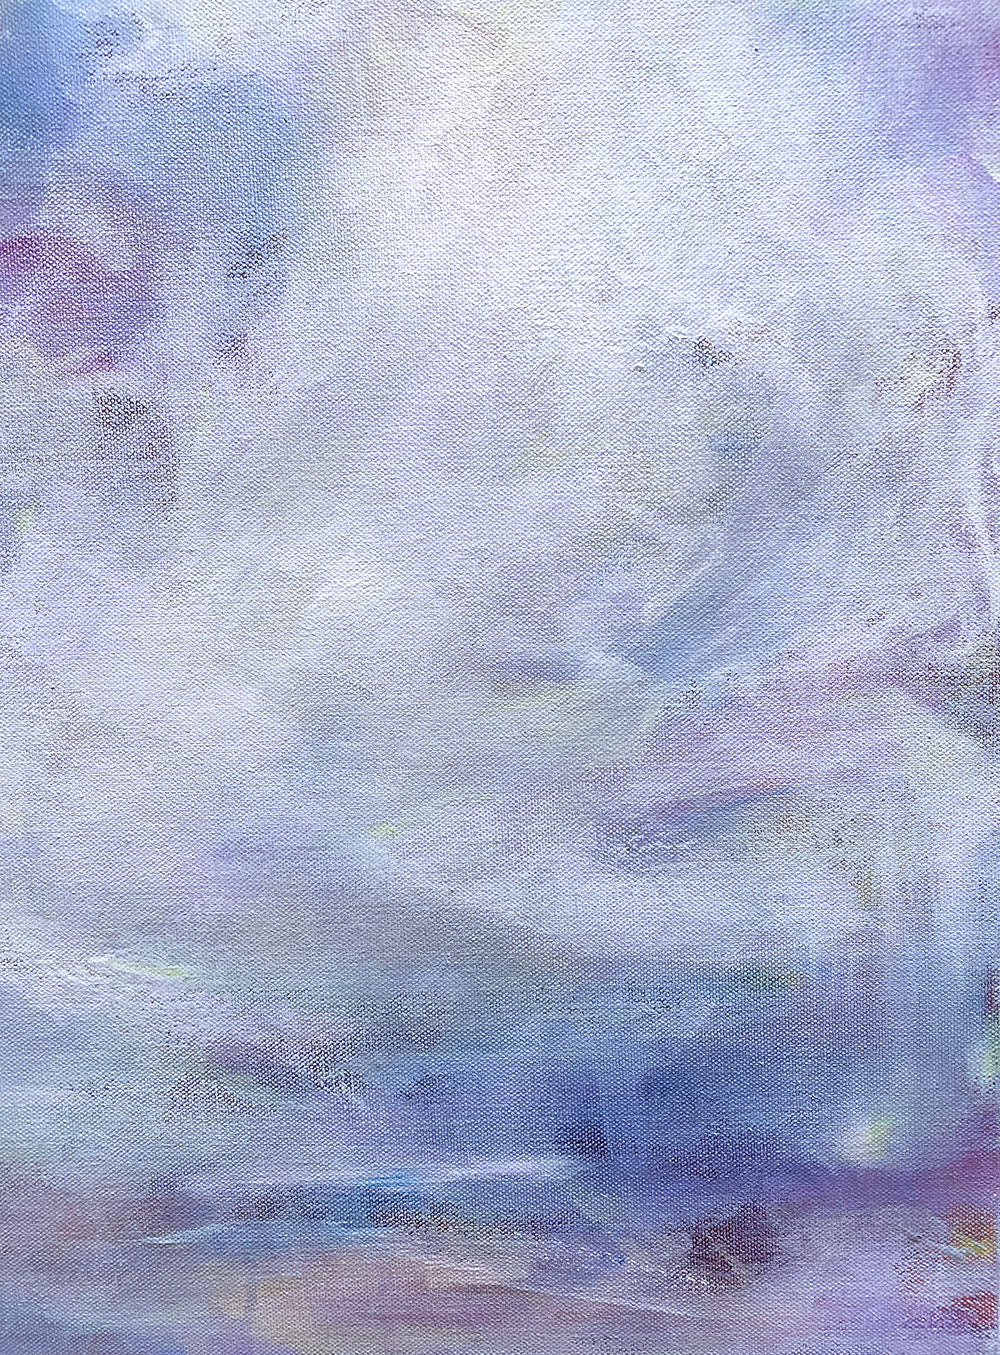 Sea Cloud IX Original Abstract Painting